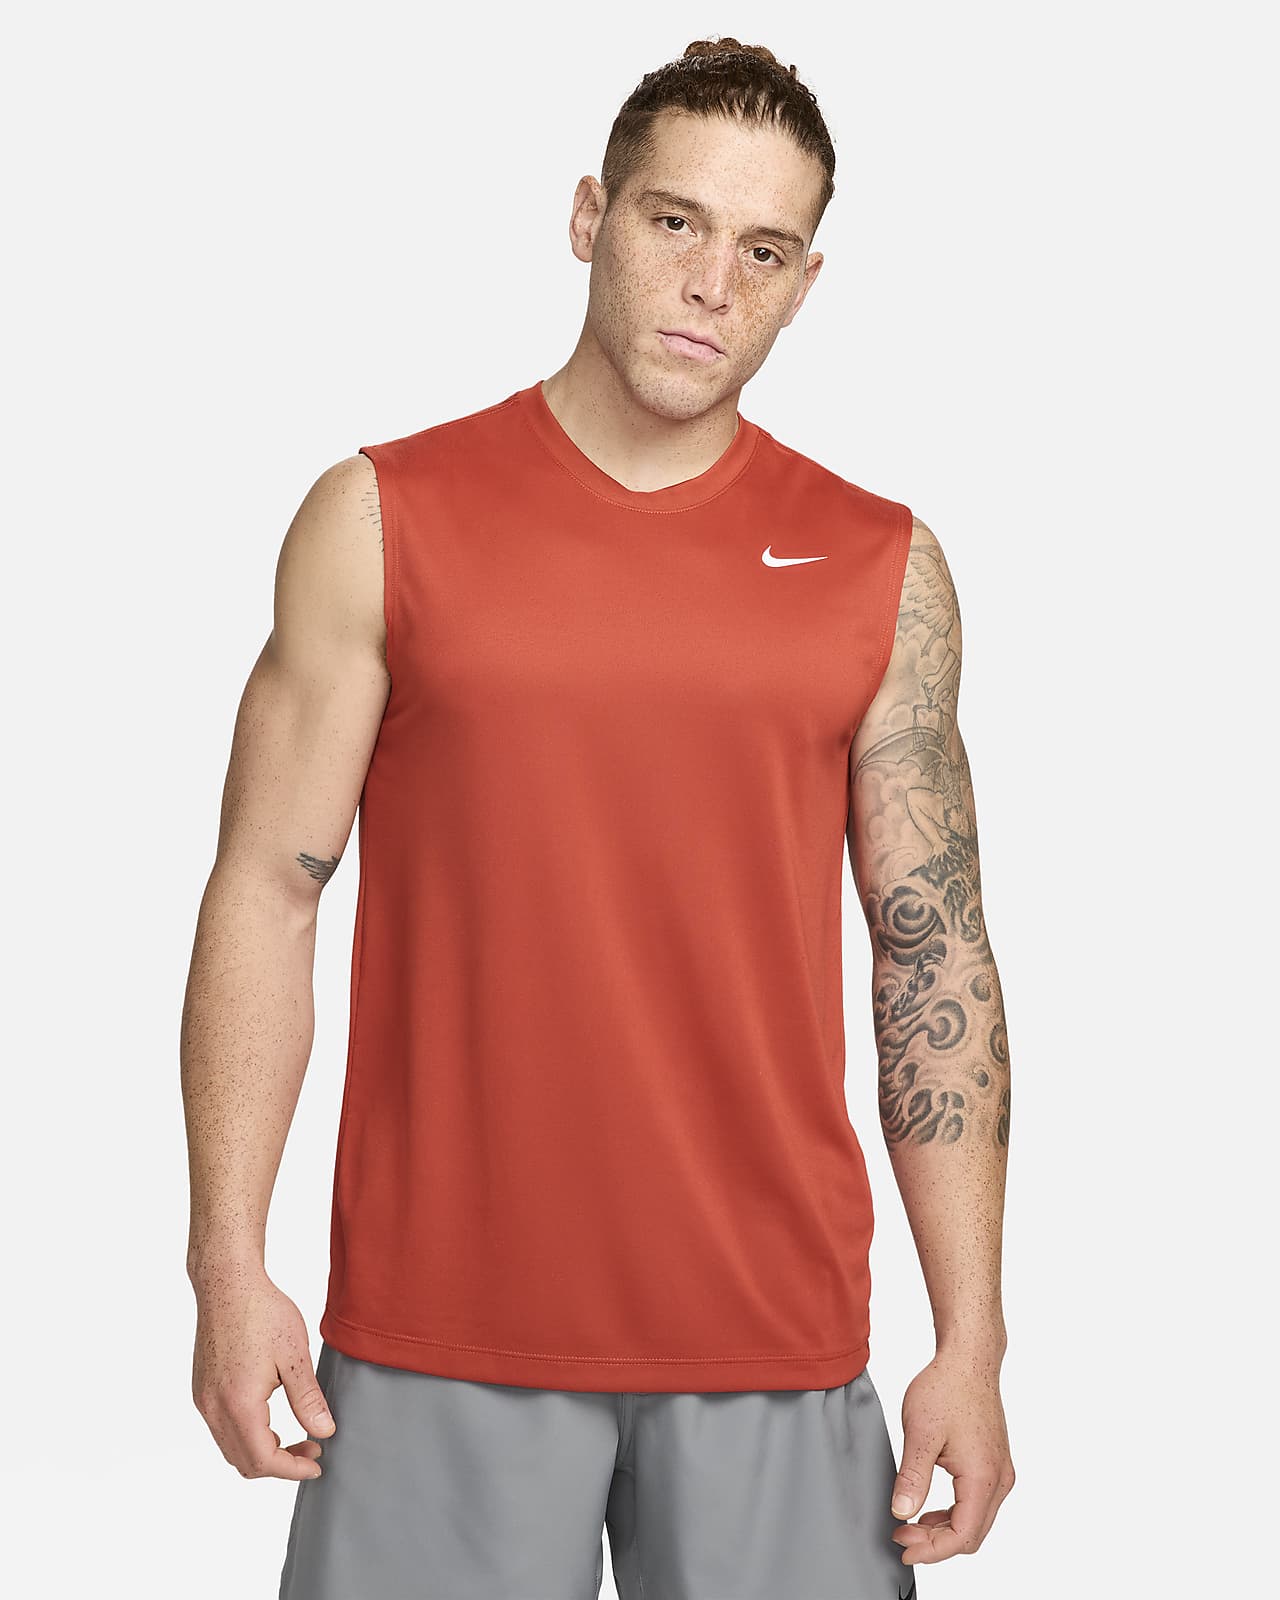 Men's Sleeveless Athletic Tee Shirt. Sizes XS-4XL